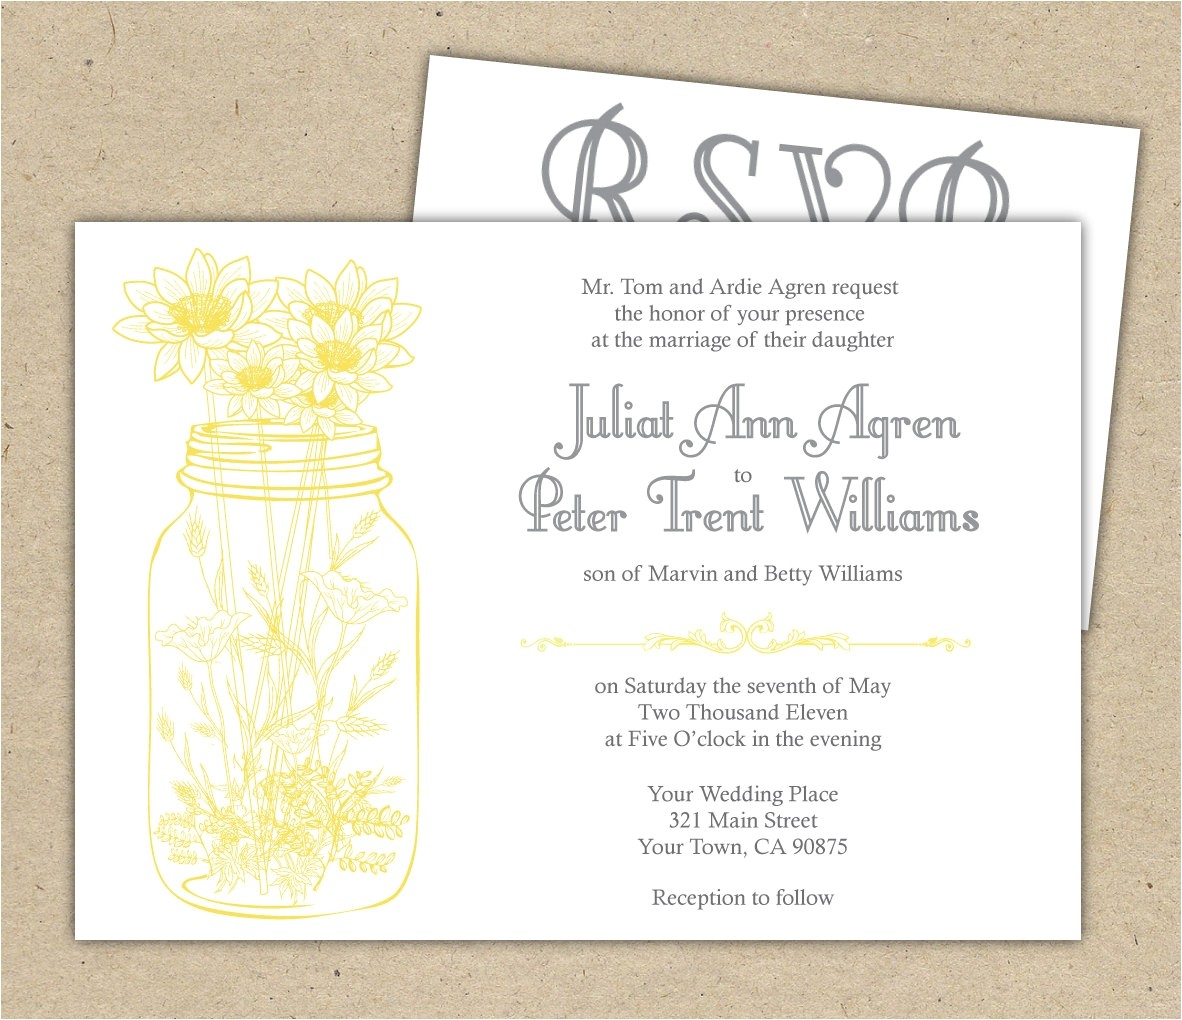 rsvp wedding invitation wording wedding rsvp follow up email wording bernit bridal